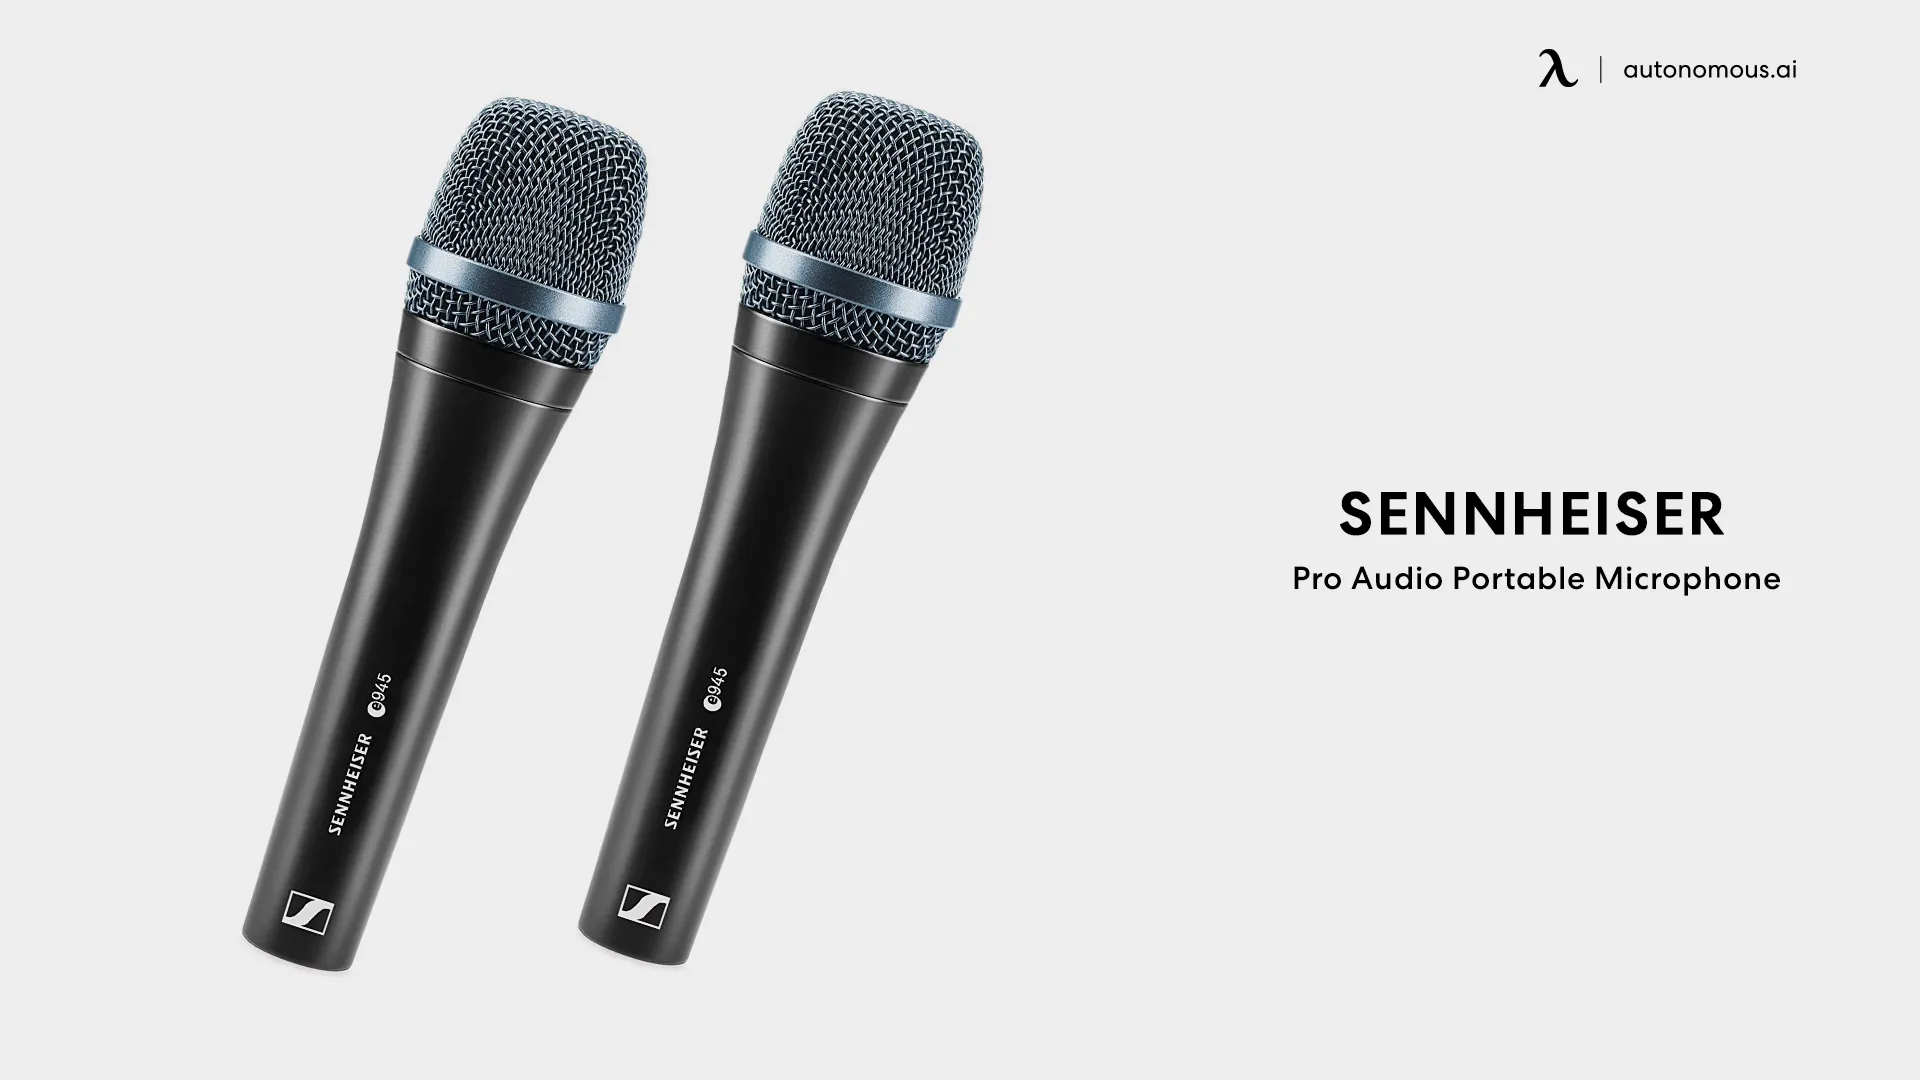 Pro Audio Portable Microphone by Sennheiser